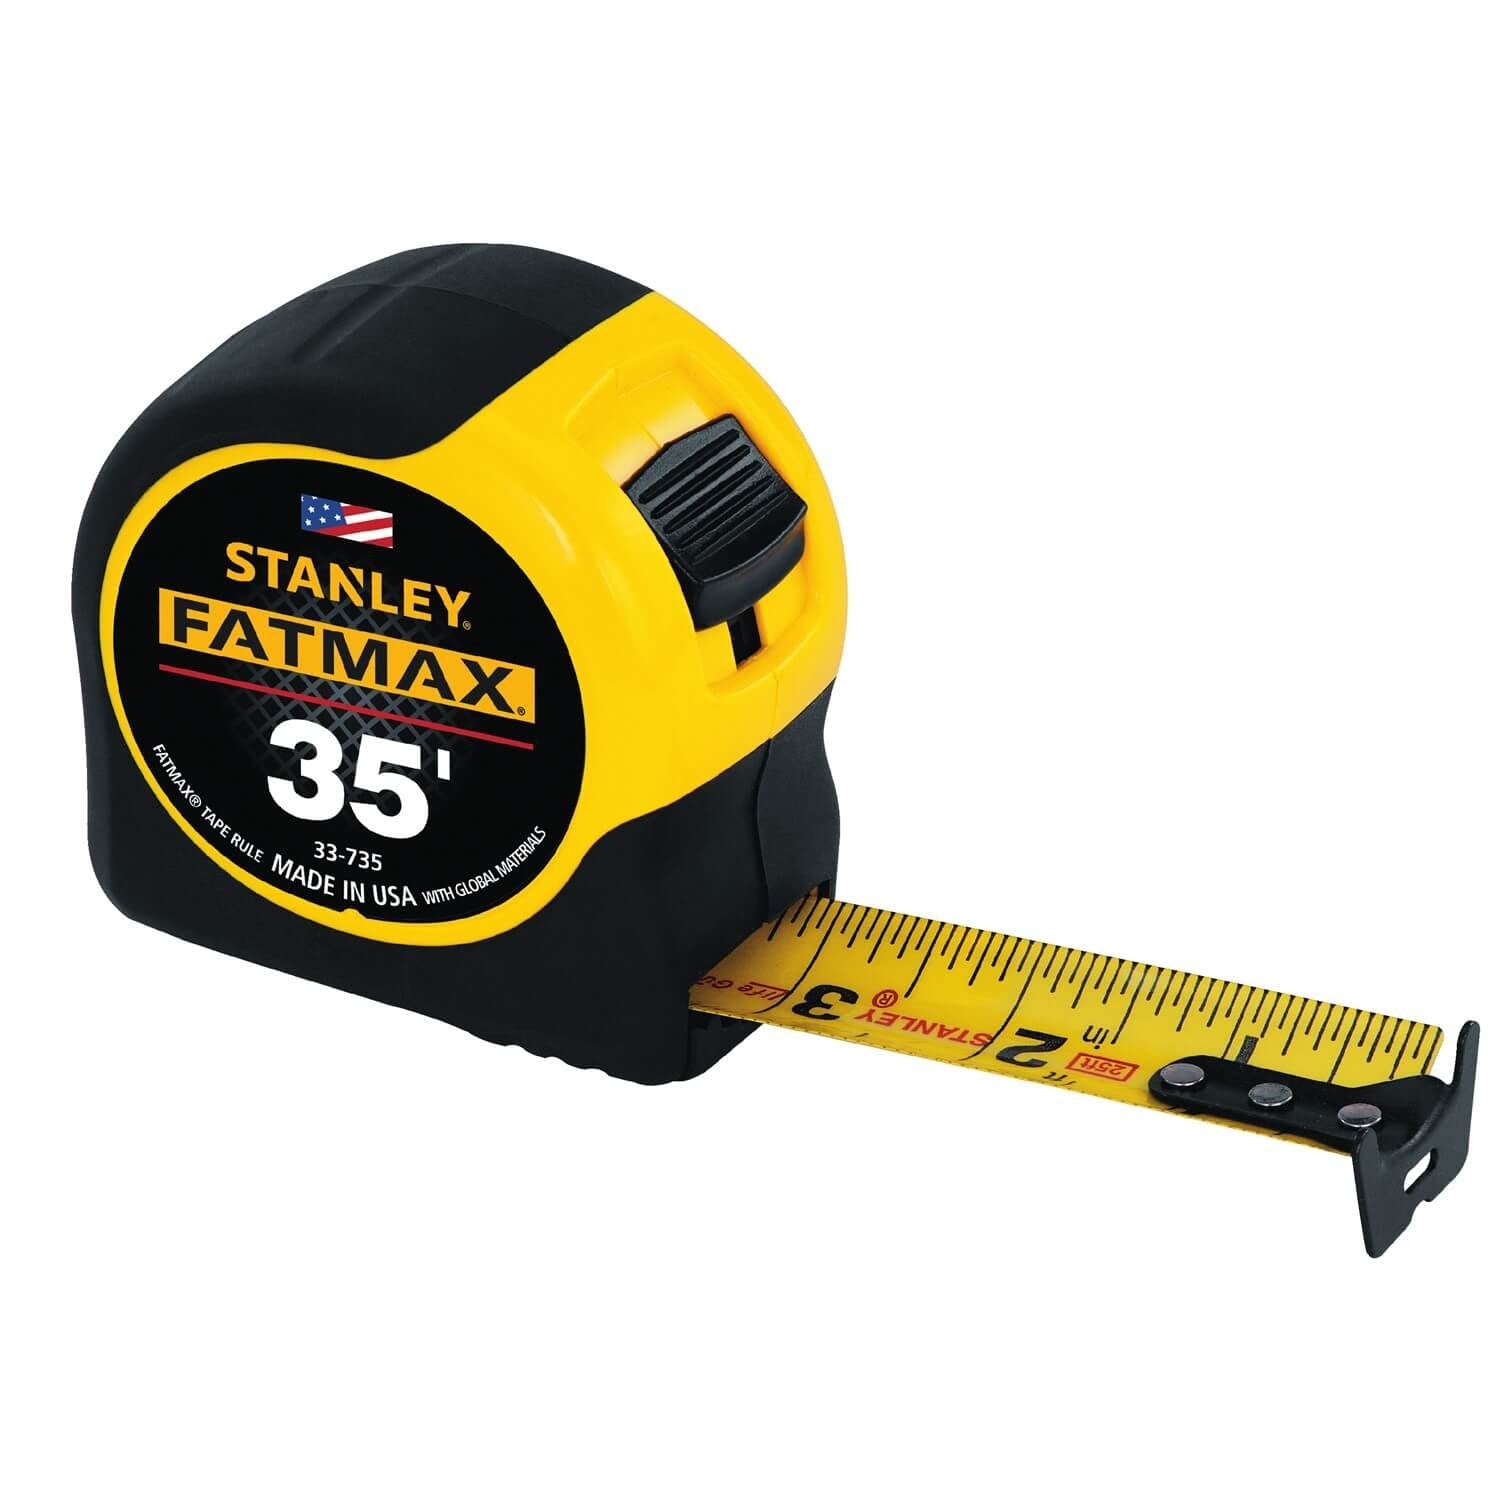 Stanley 33-735 - FATMAX 35' Tape Measure